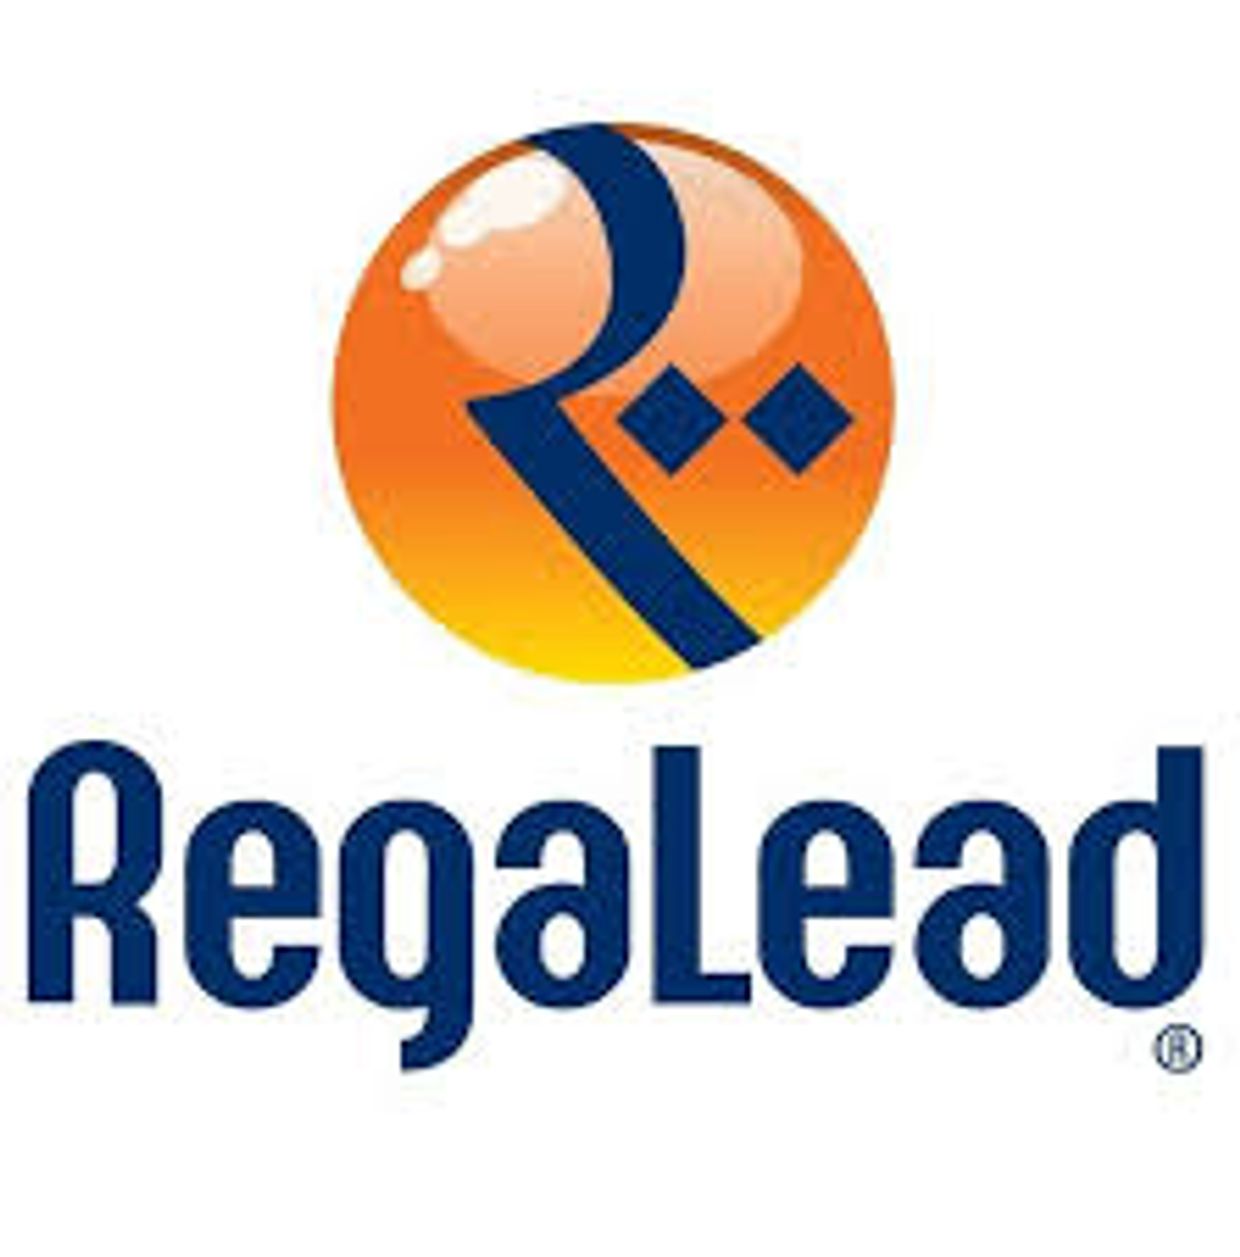 Regalead Logo